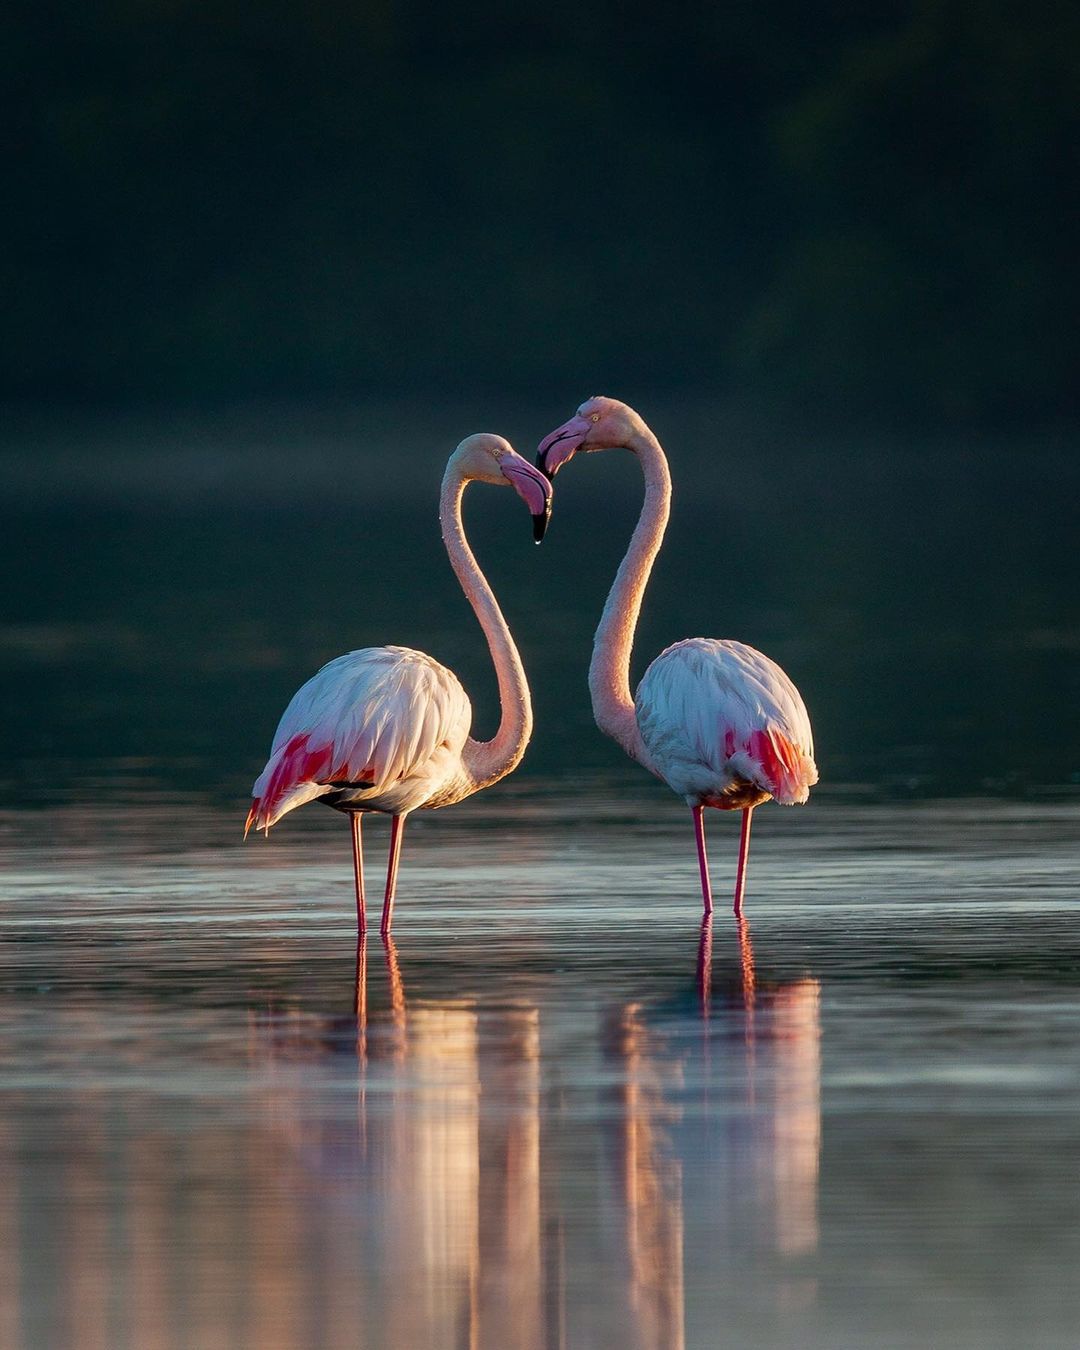 Flamingos are enjoying the early morning vibe